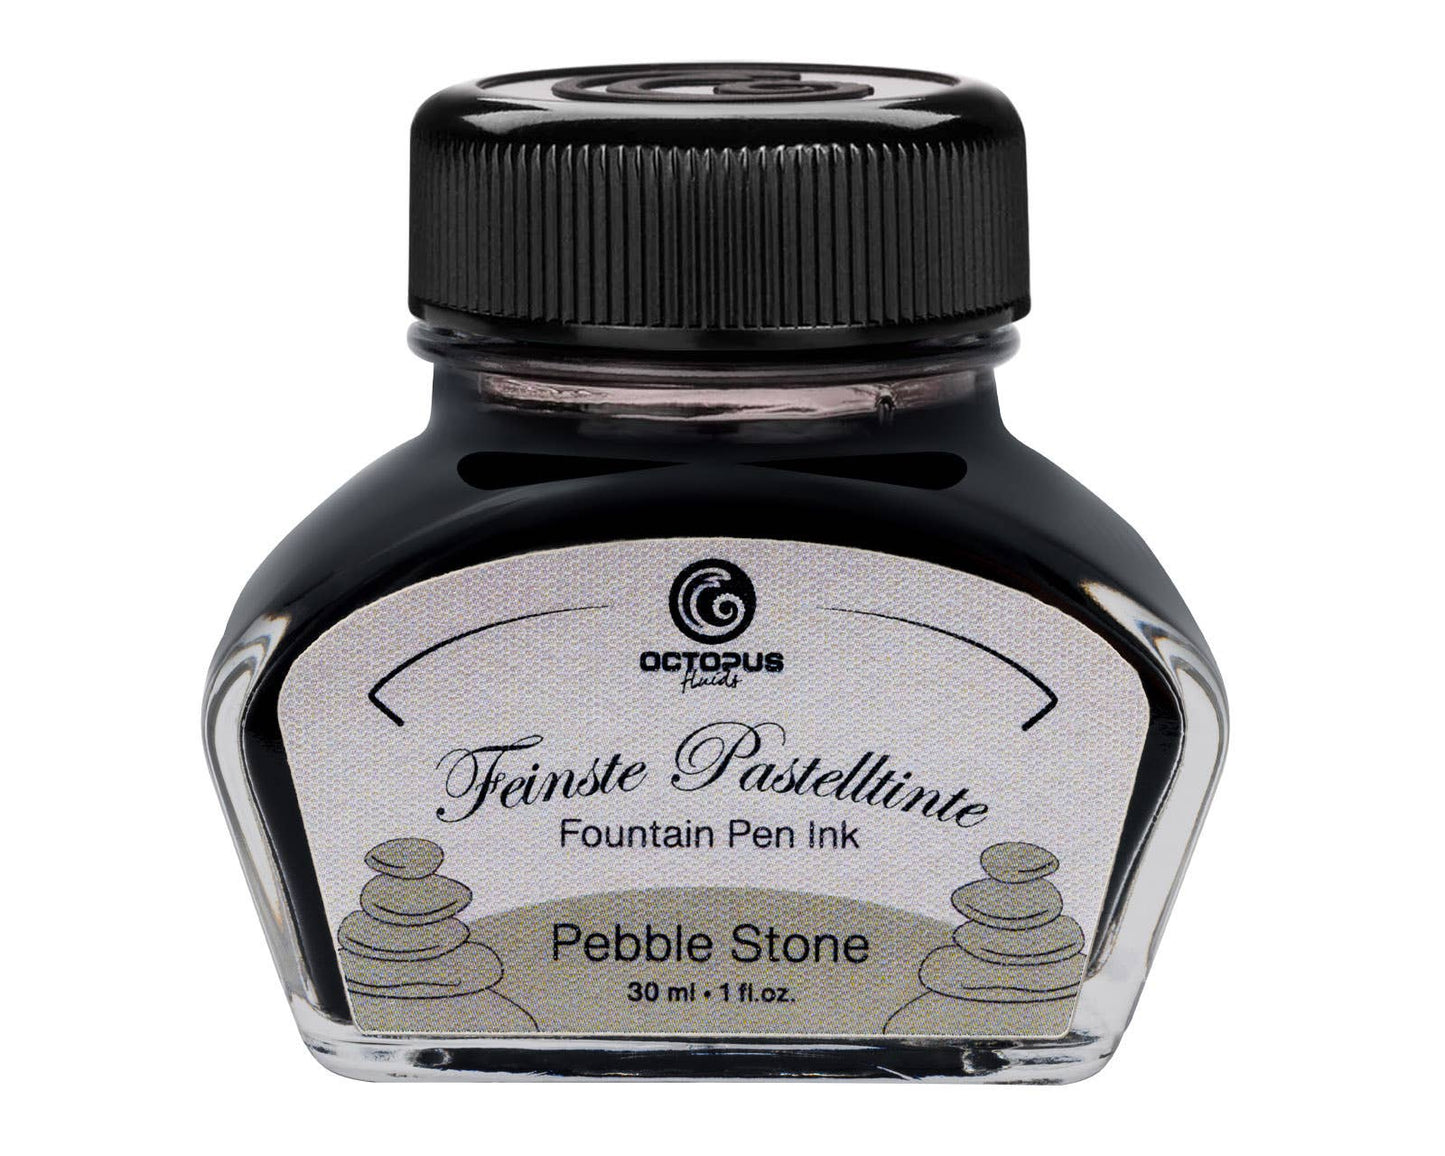 Fountain pen ink pastel grey “Pebble Stone” 30 ml